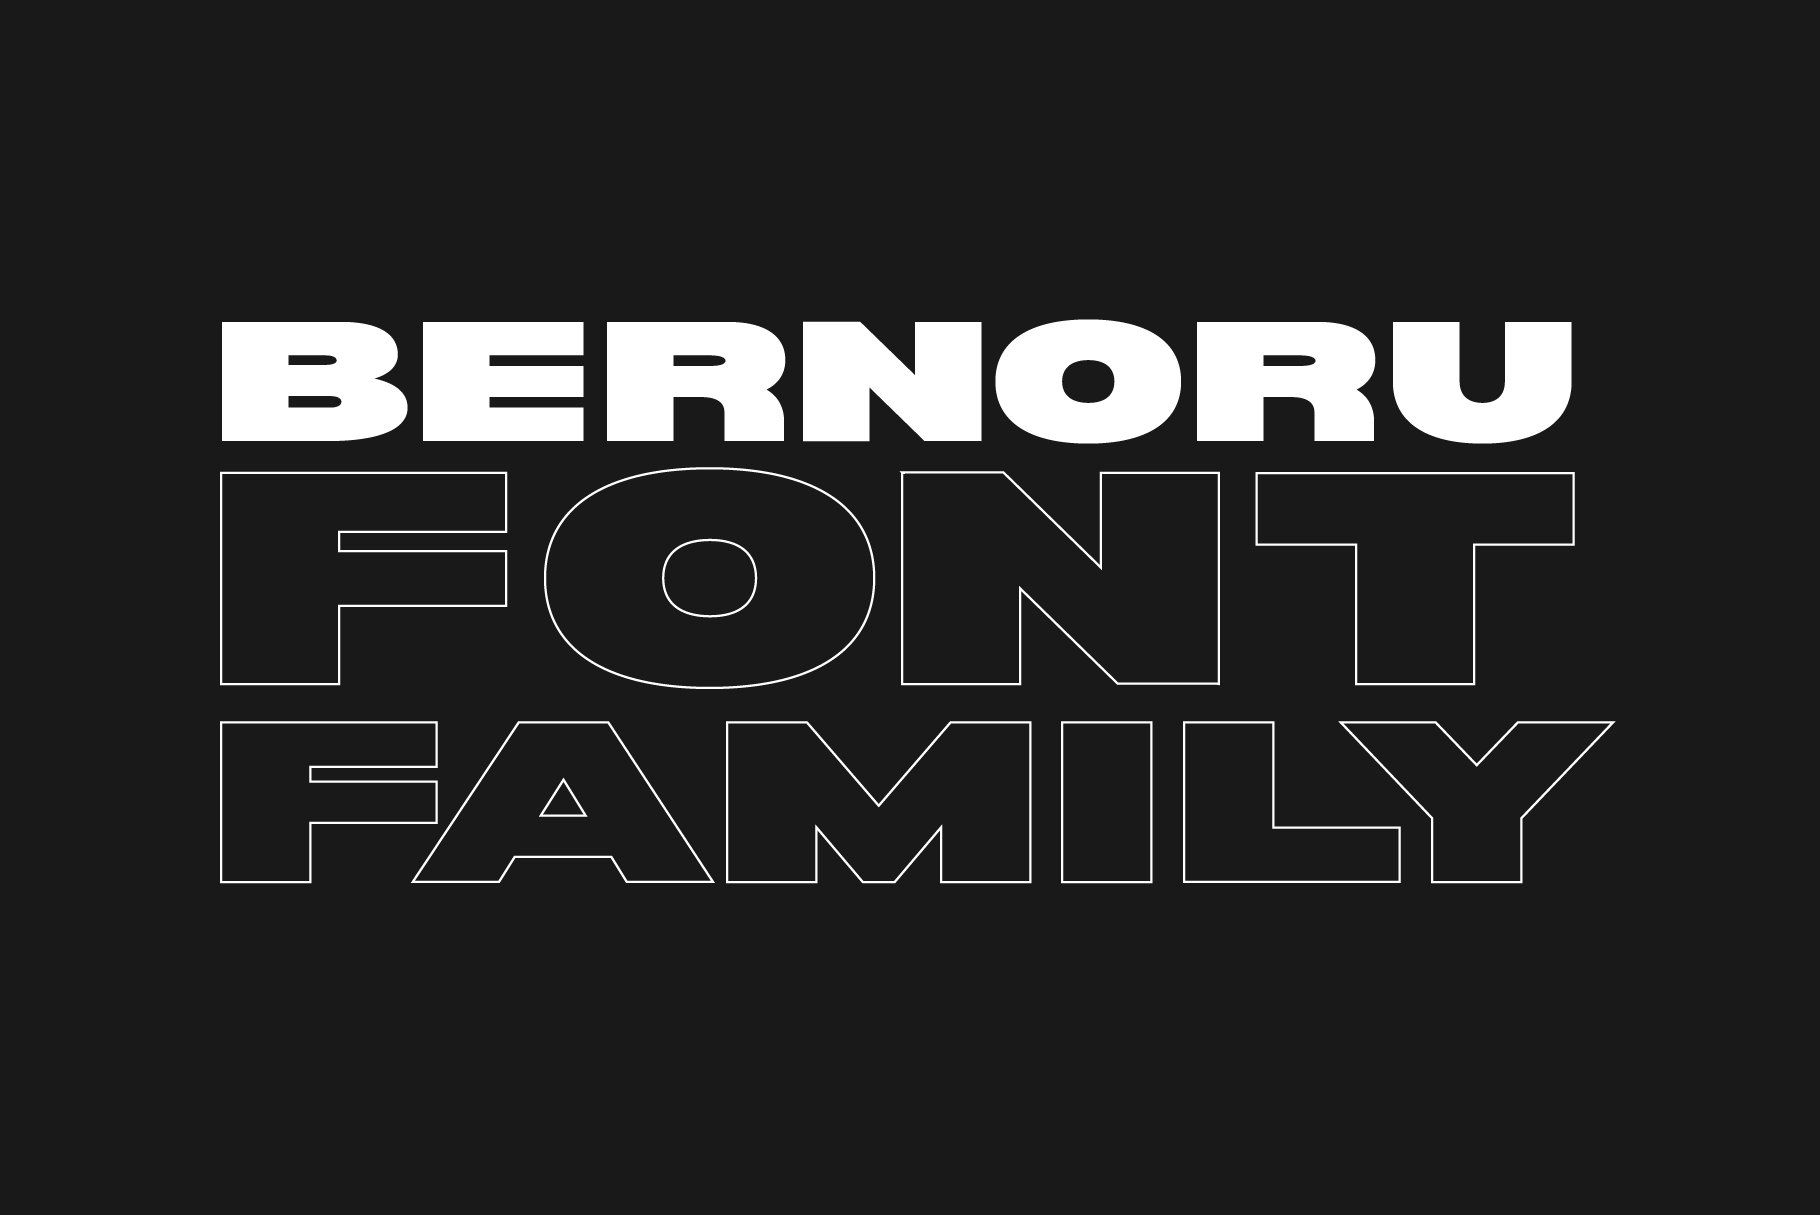 Bernoru Sans Font Family cover image.